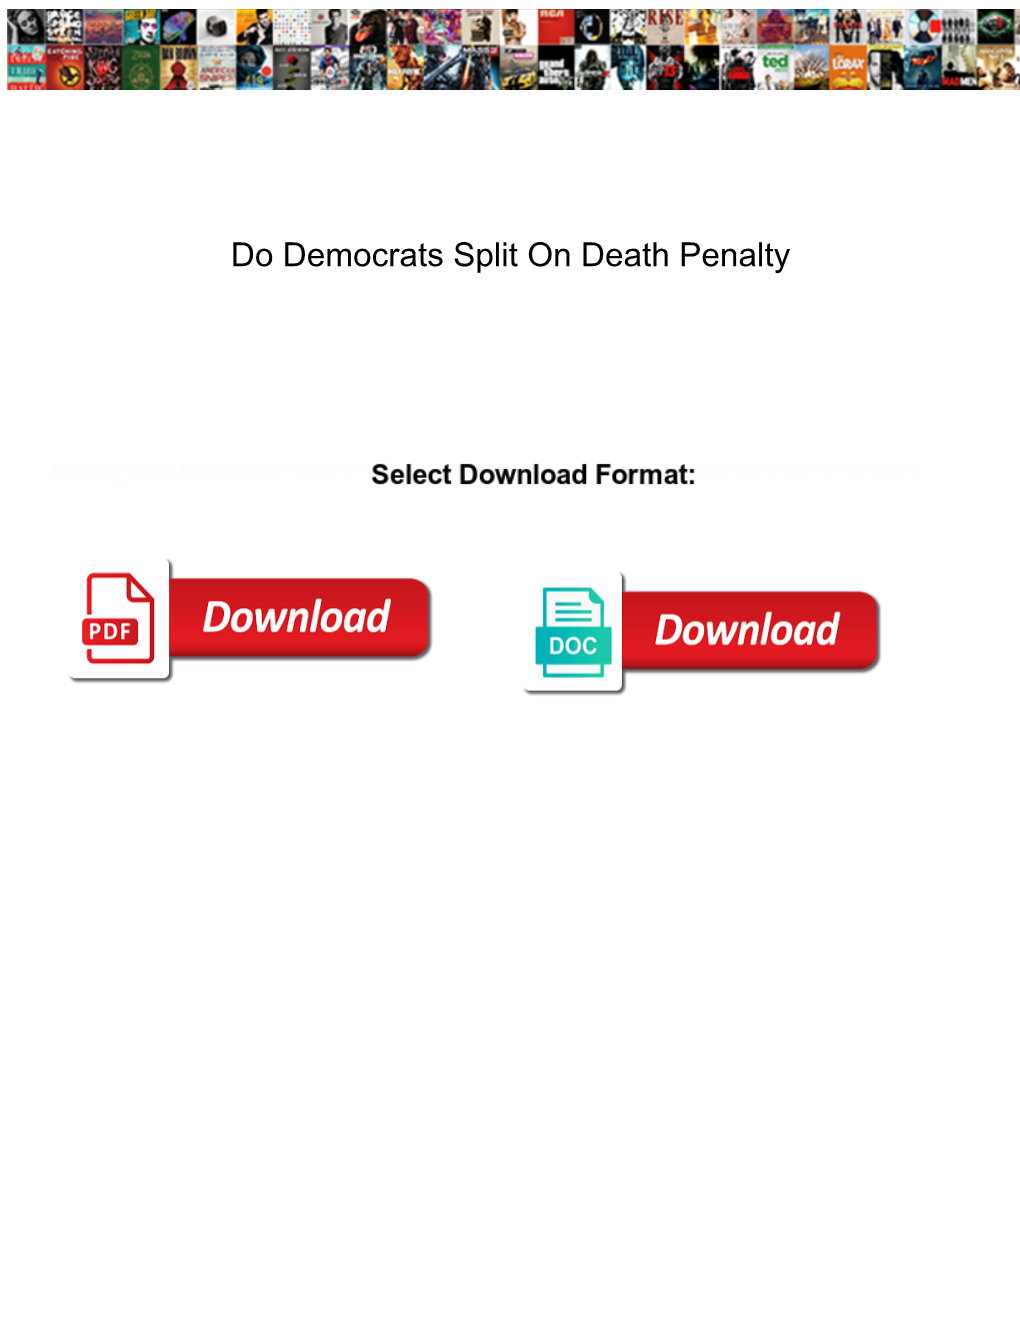 Do Democrats Split on Death Penalty